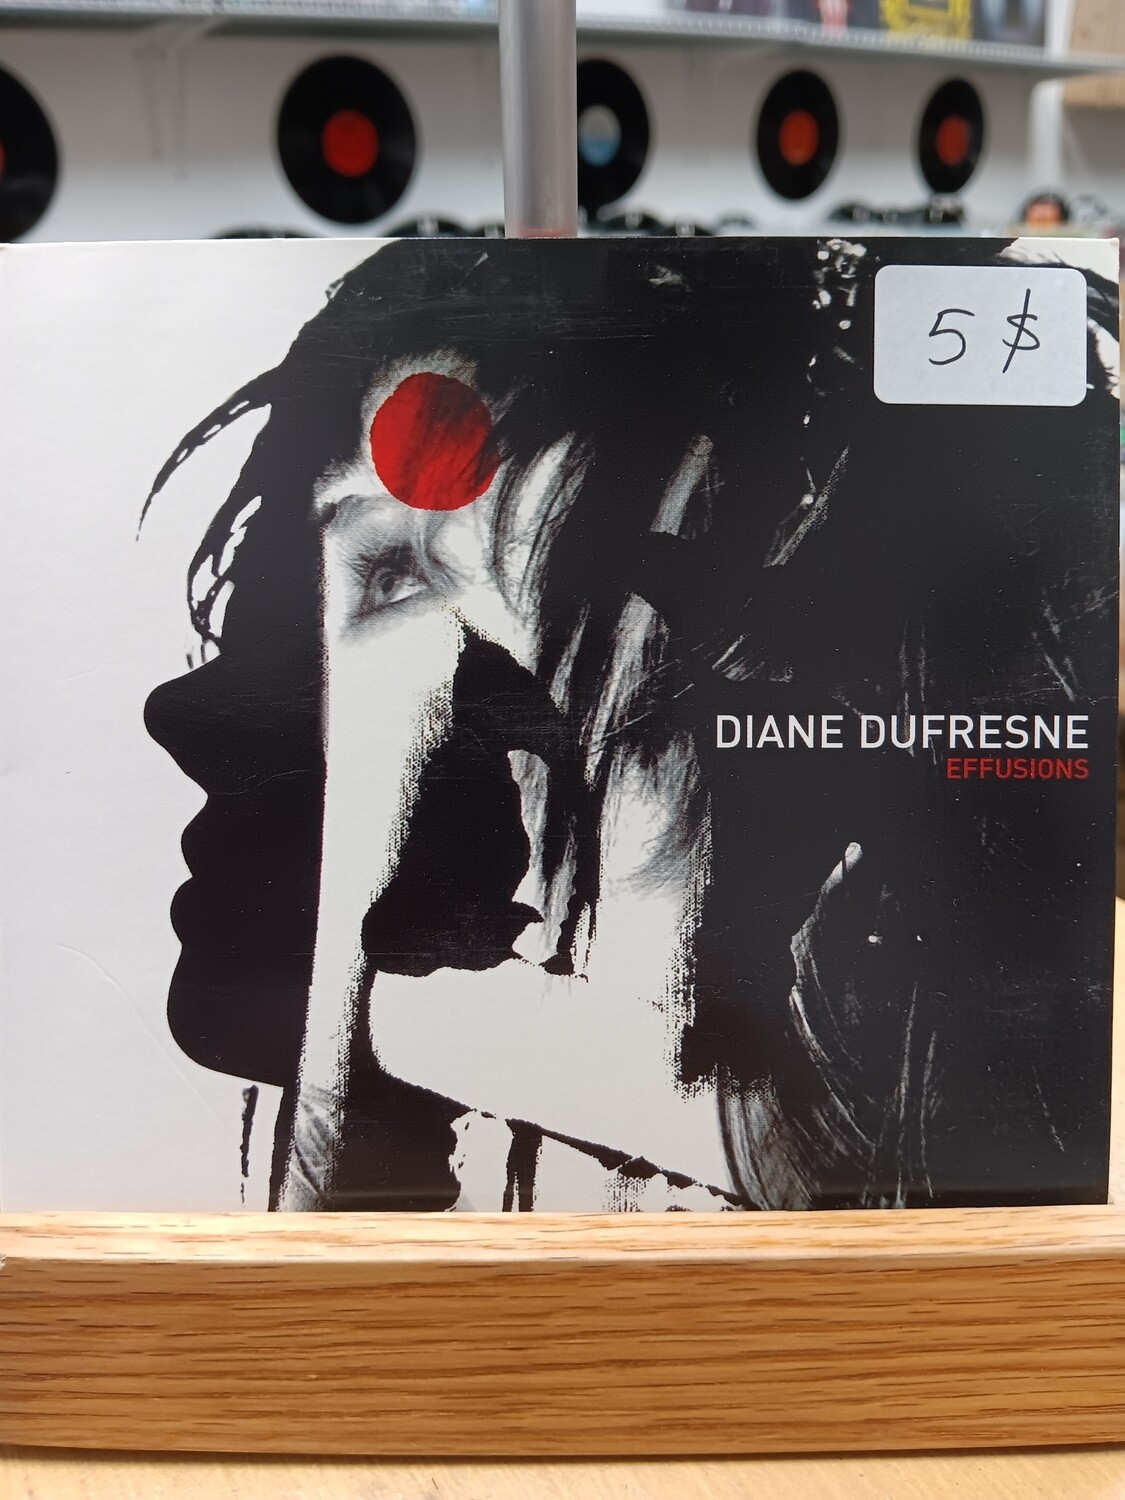 Diane Dufresne - Effusions (CD)